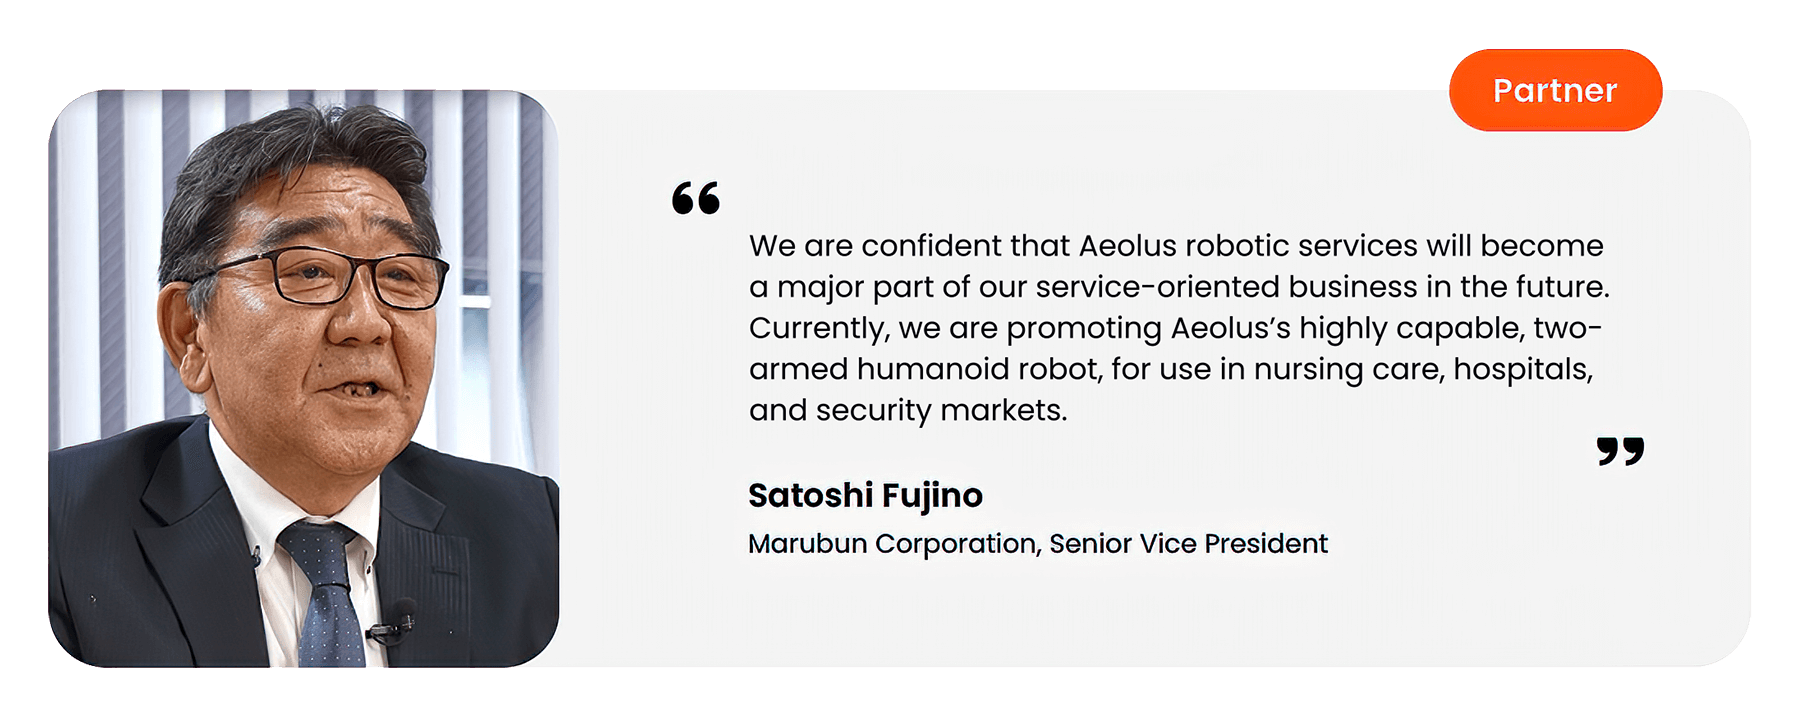 images/carosel/partner3.webp - Aeolus Aeo Robot Care Partner Testimonial